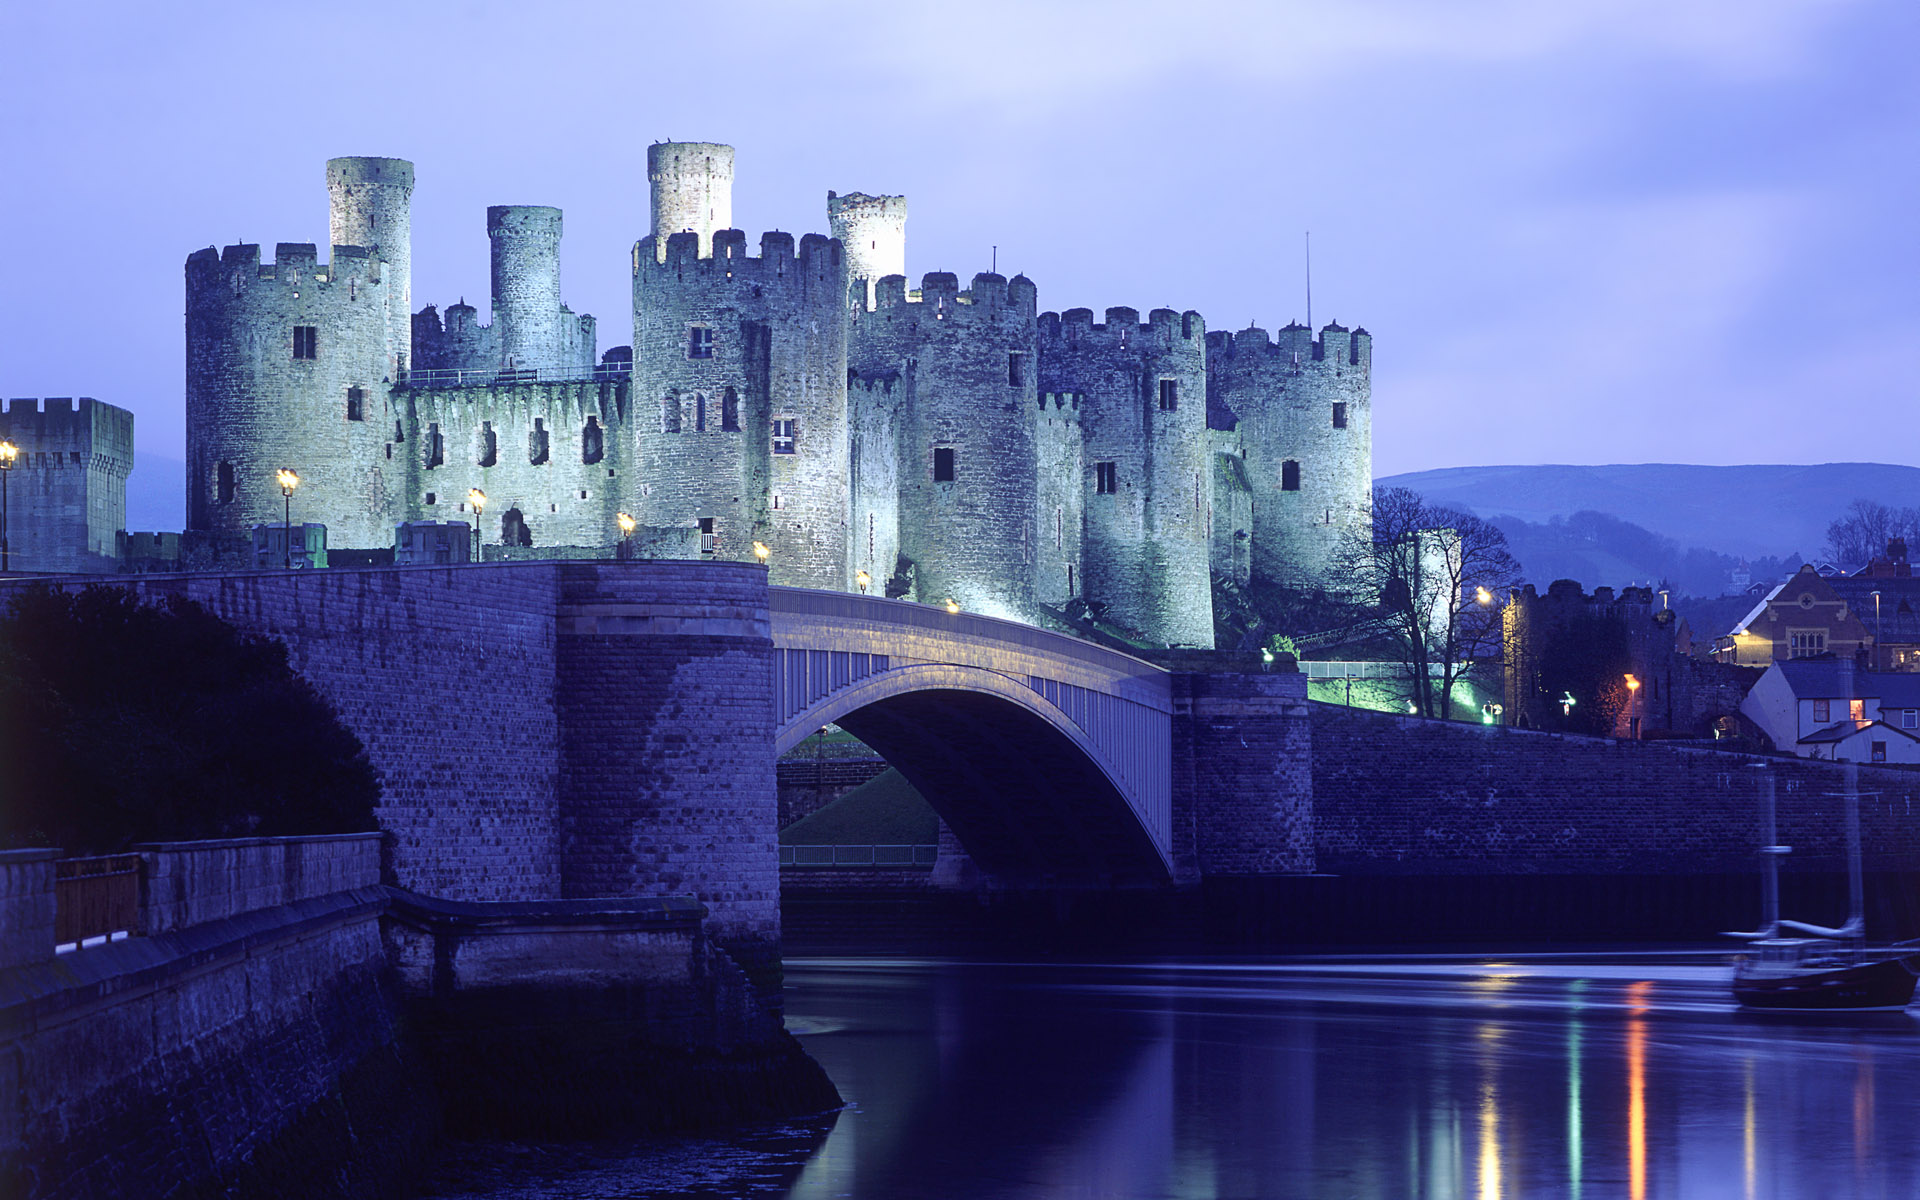 castles, bridges - desktop wallpaper